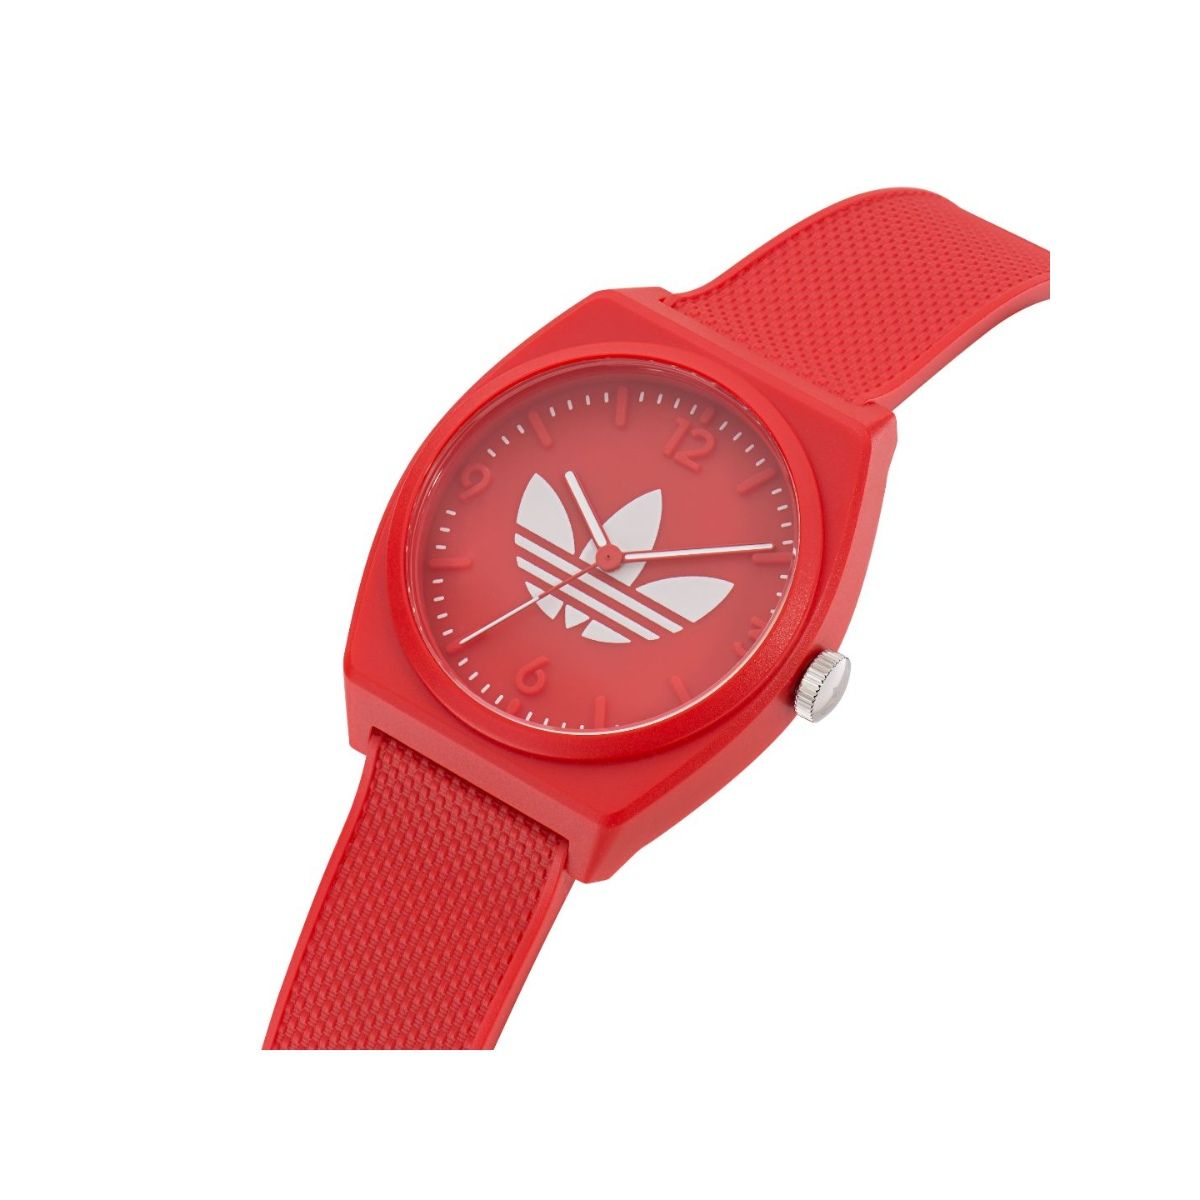 Casio G Shock Digital Watch (Ferrari) Red GF05 - Finebuy